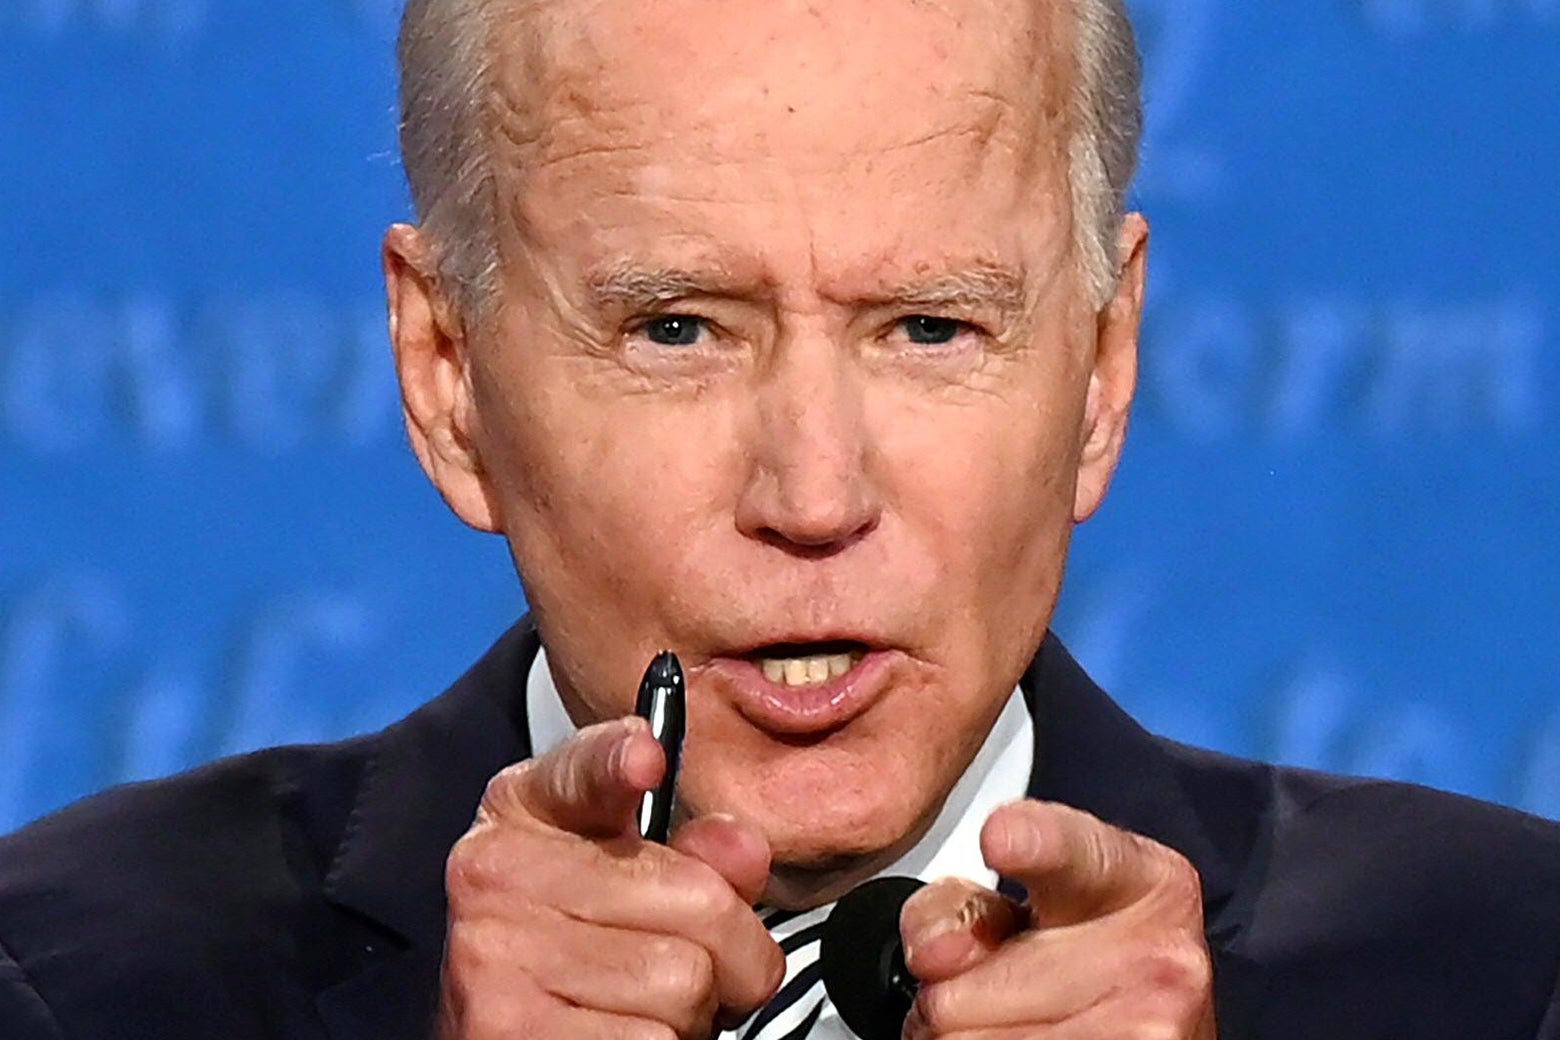 Does Joe Biden embarrass you when you see him mumbling and